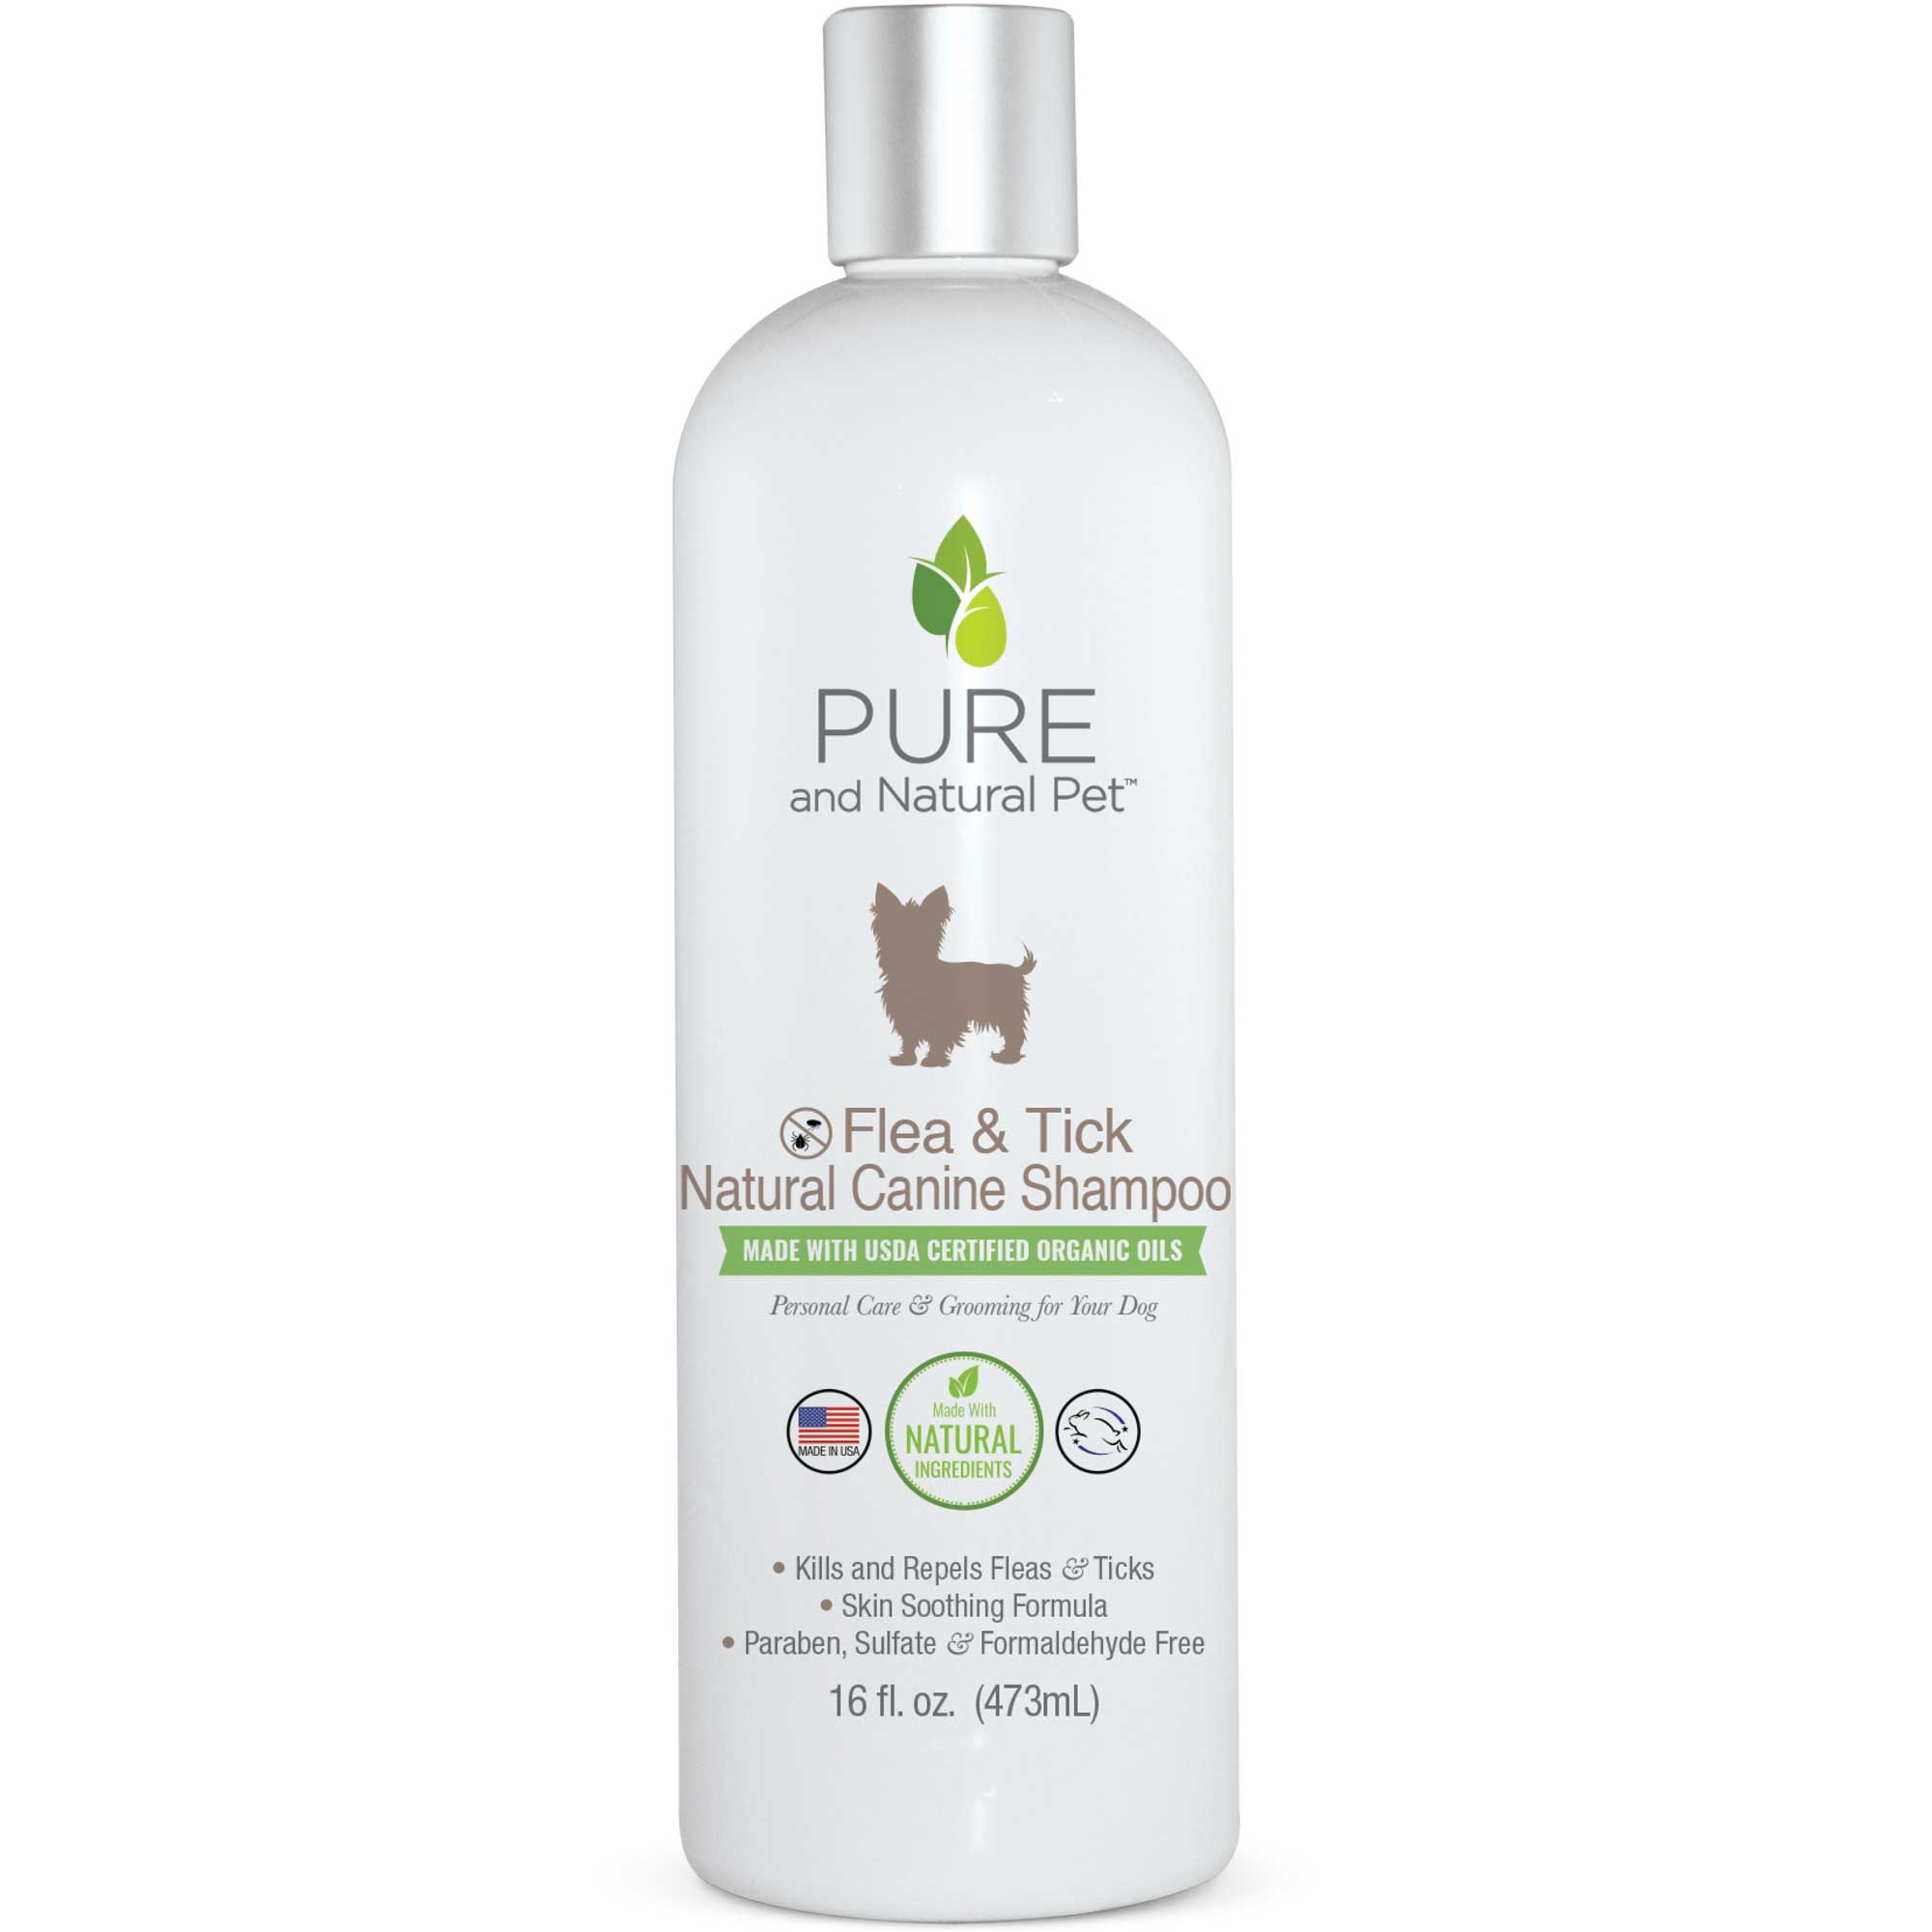 Pure and Natural Pet Flea and Tick Shampoo Usage